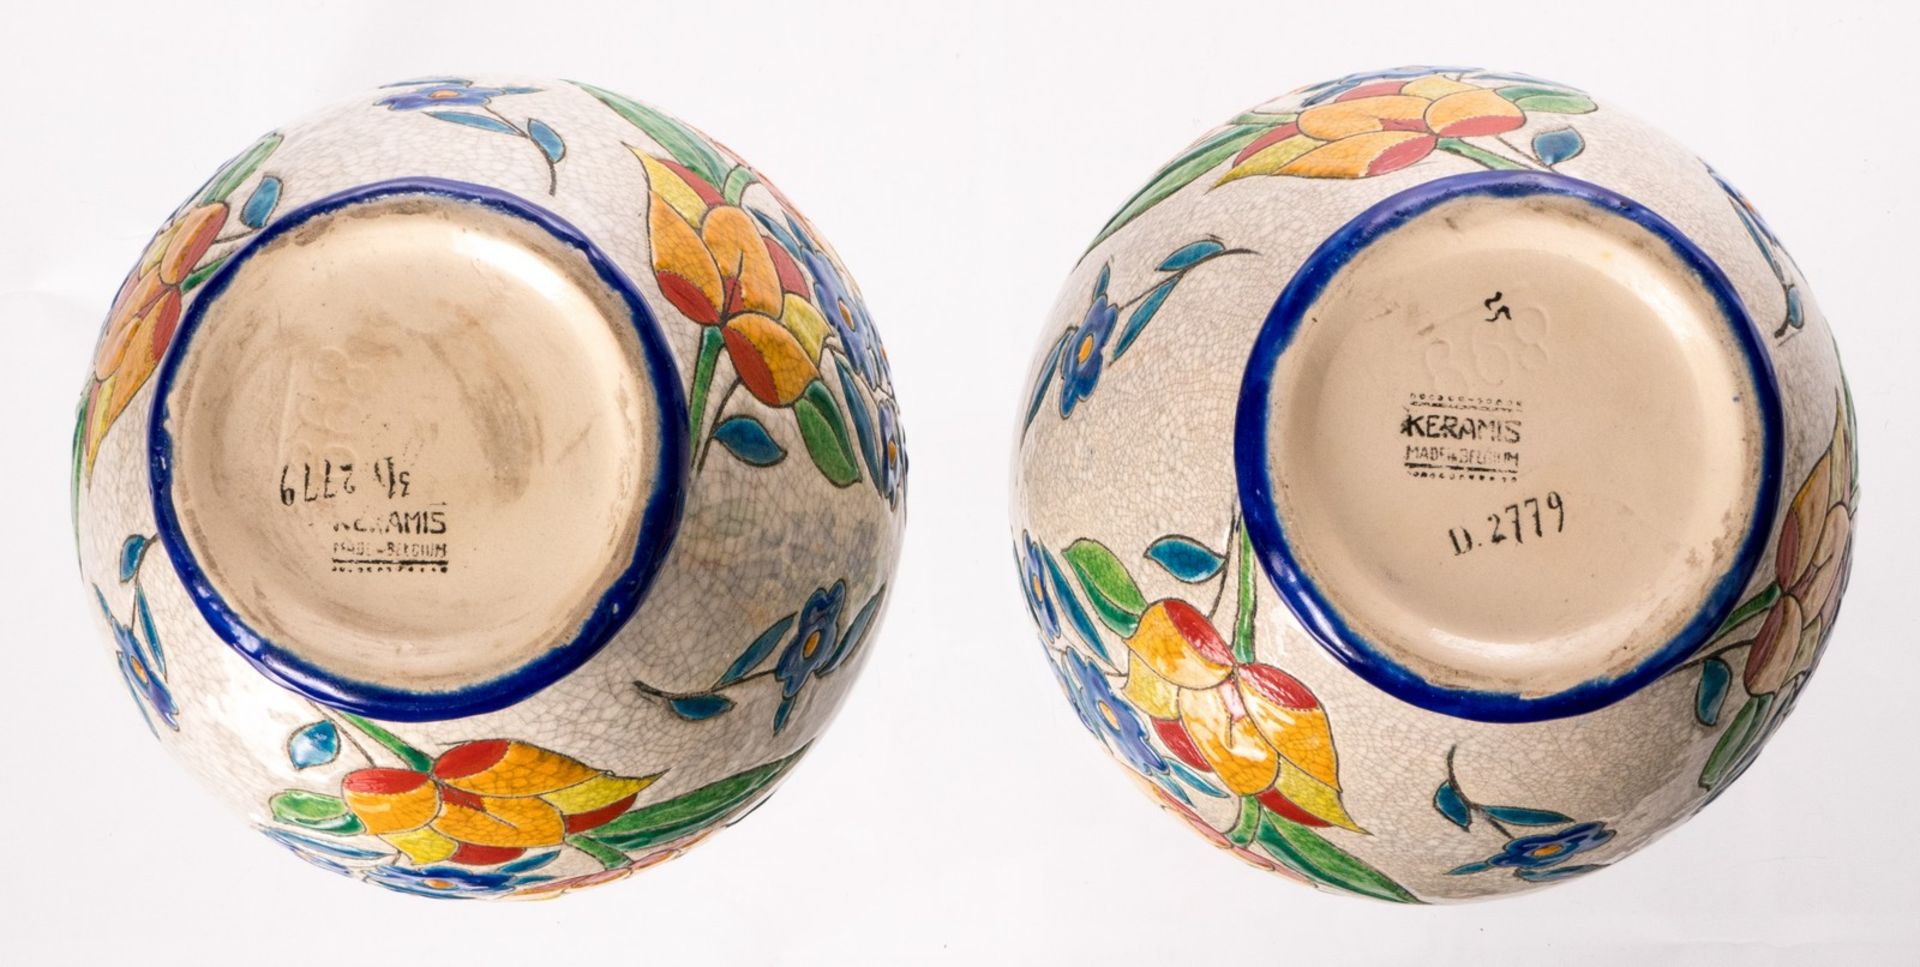 A pair of Keramis vases, workshop Catteau, catalog number D2779, H 27 cm - Image 5 of 8